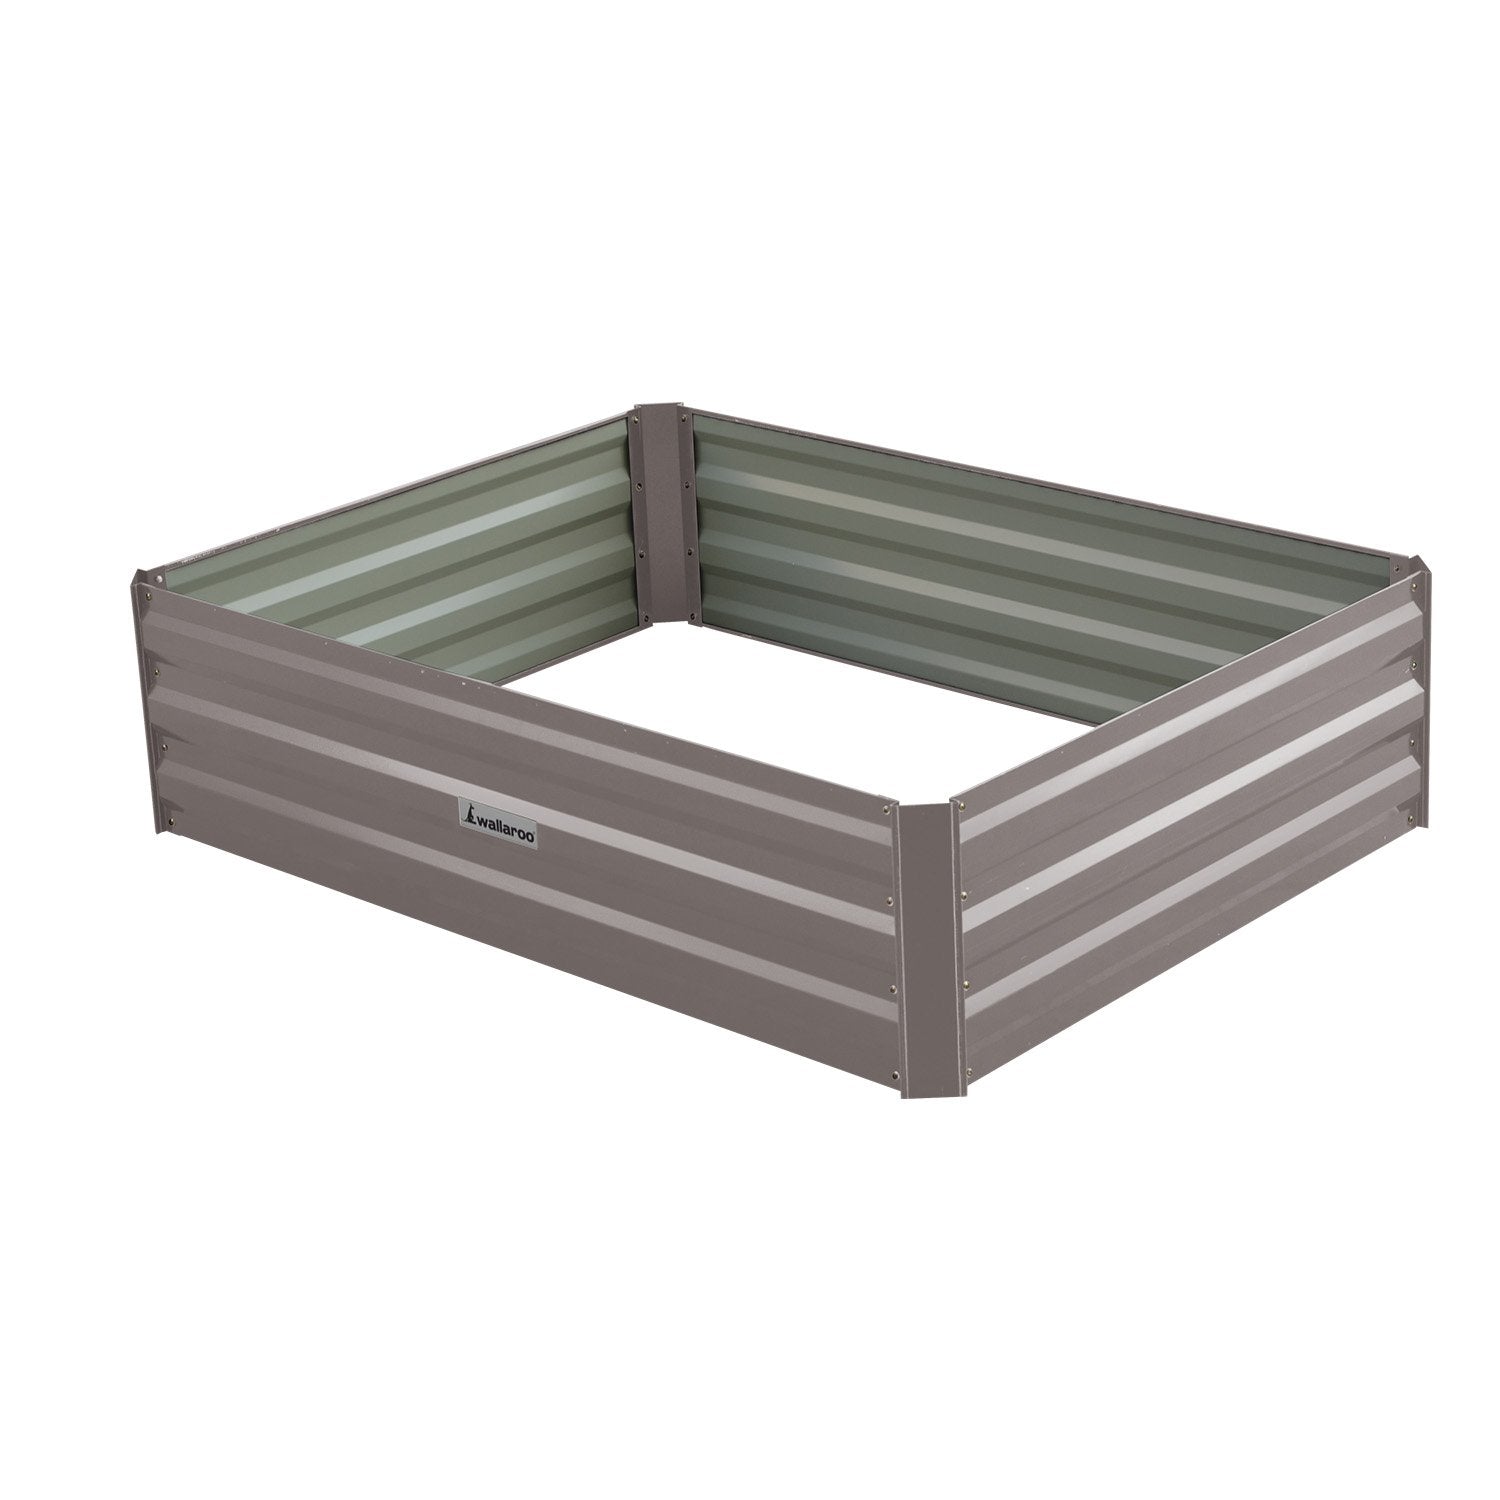 Wallaroo Garden Bed 120 x 90 x 30cm Galvanized Steel - Grey - SILBERSHELL